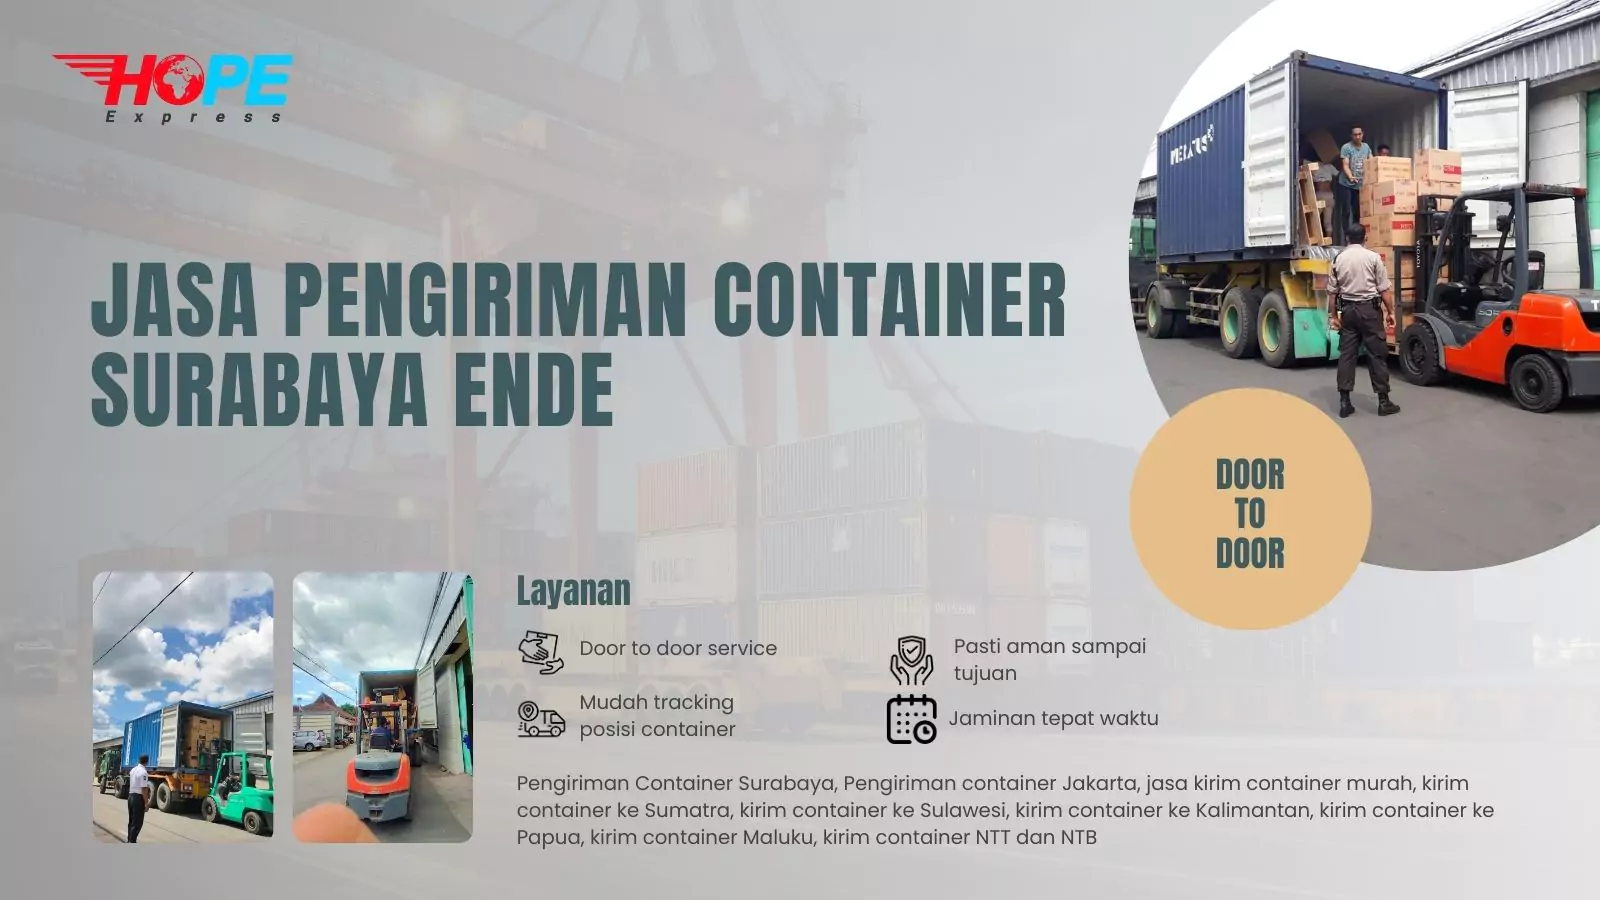 Jasa Pengiriman Container Surabaya Ende